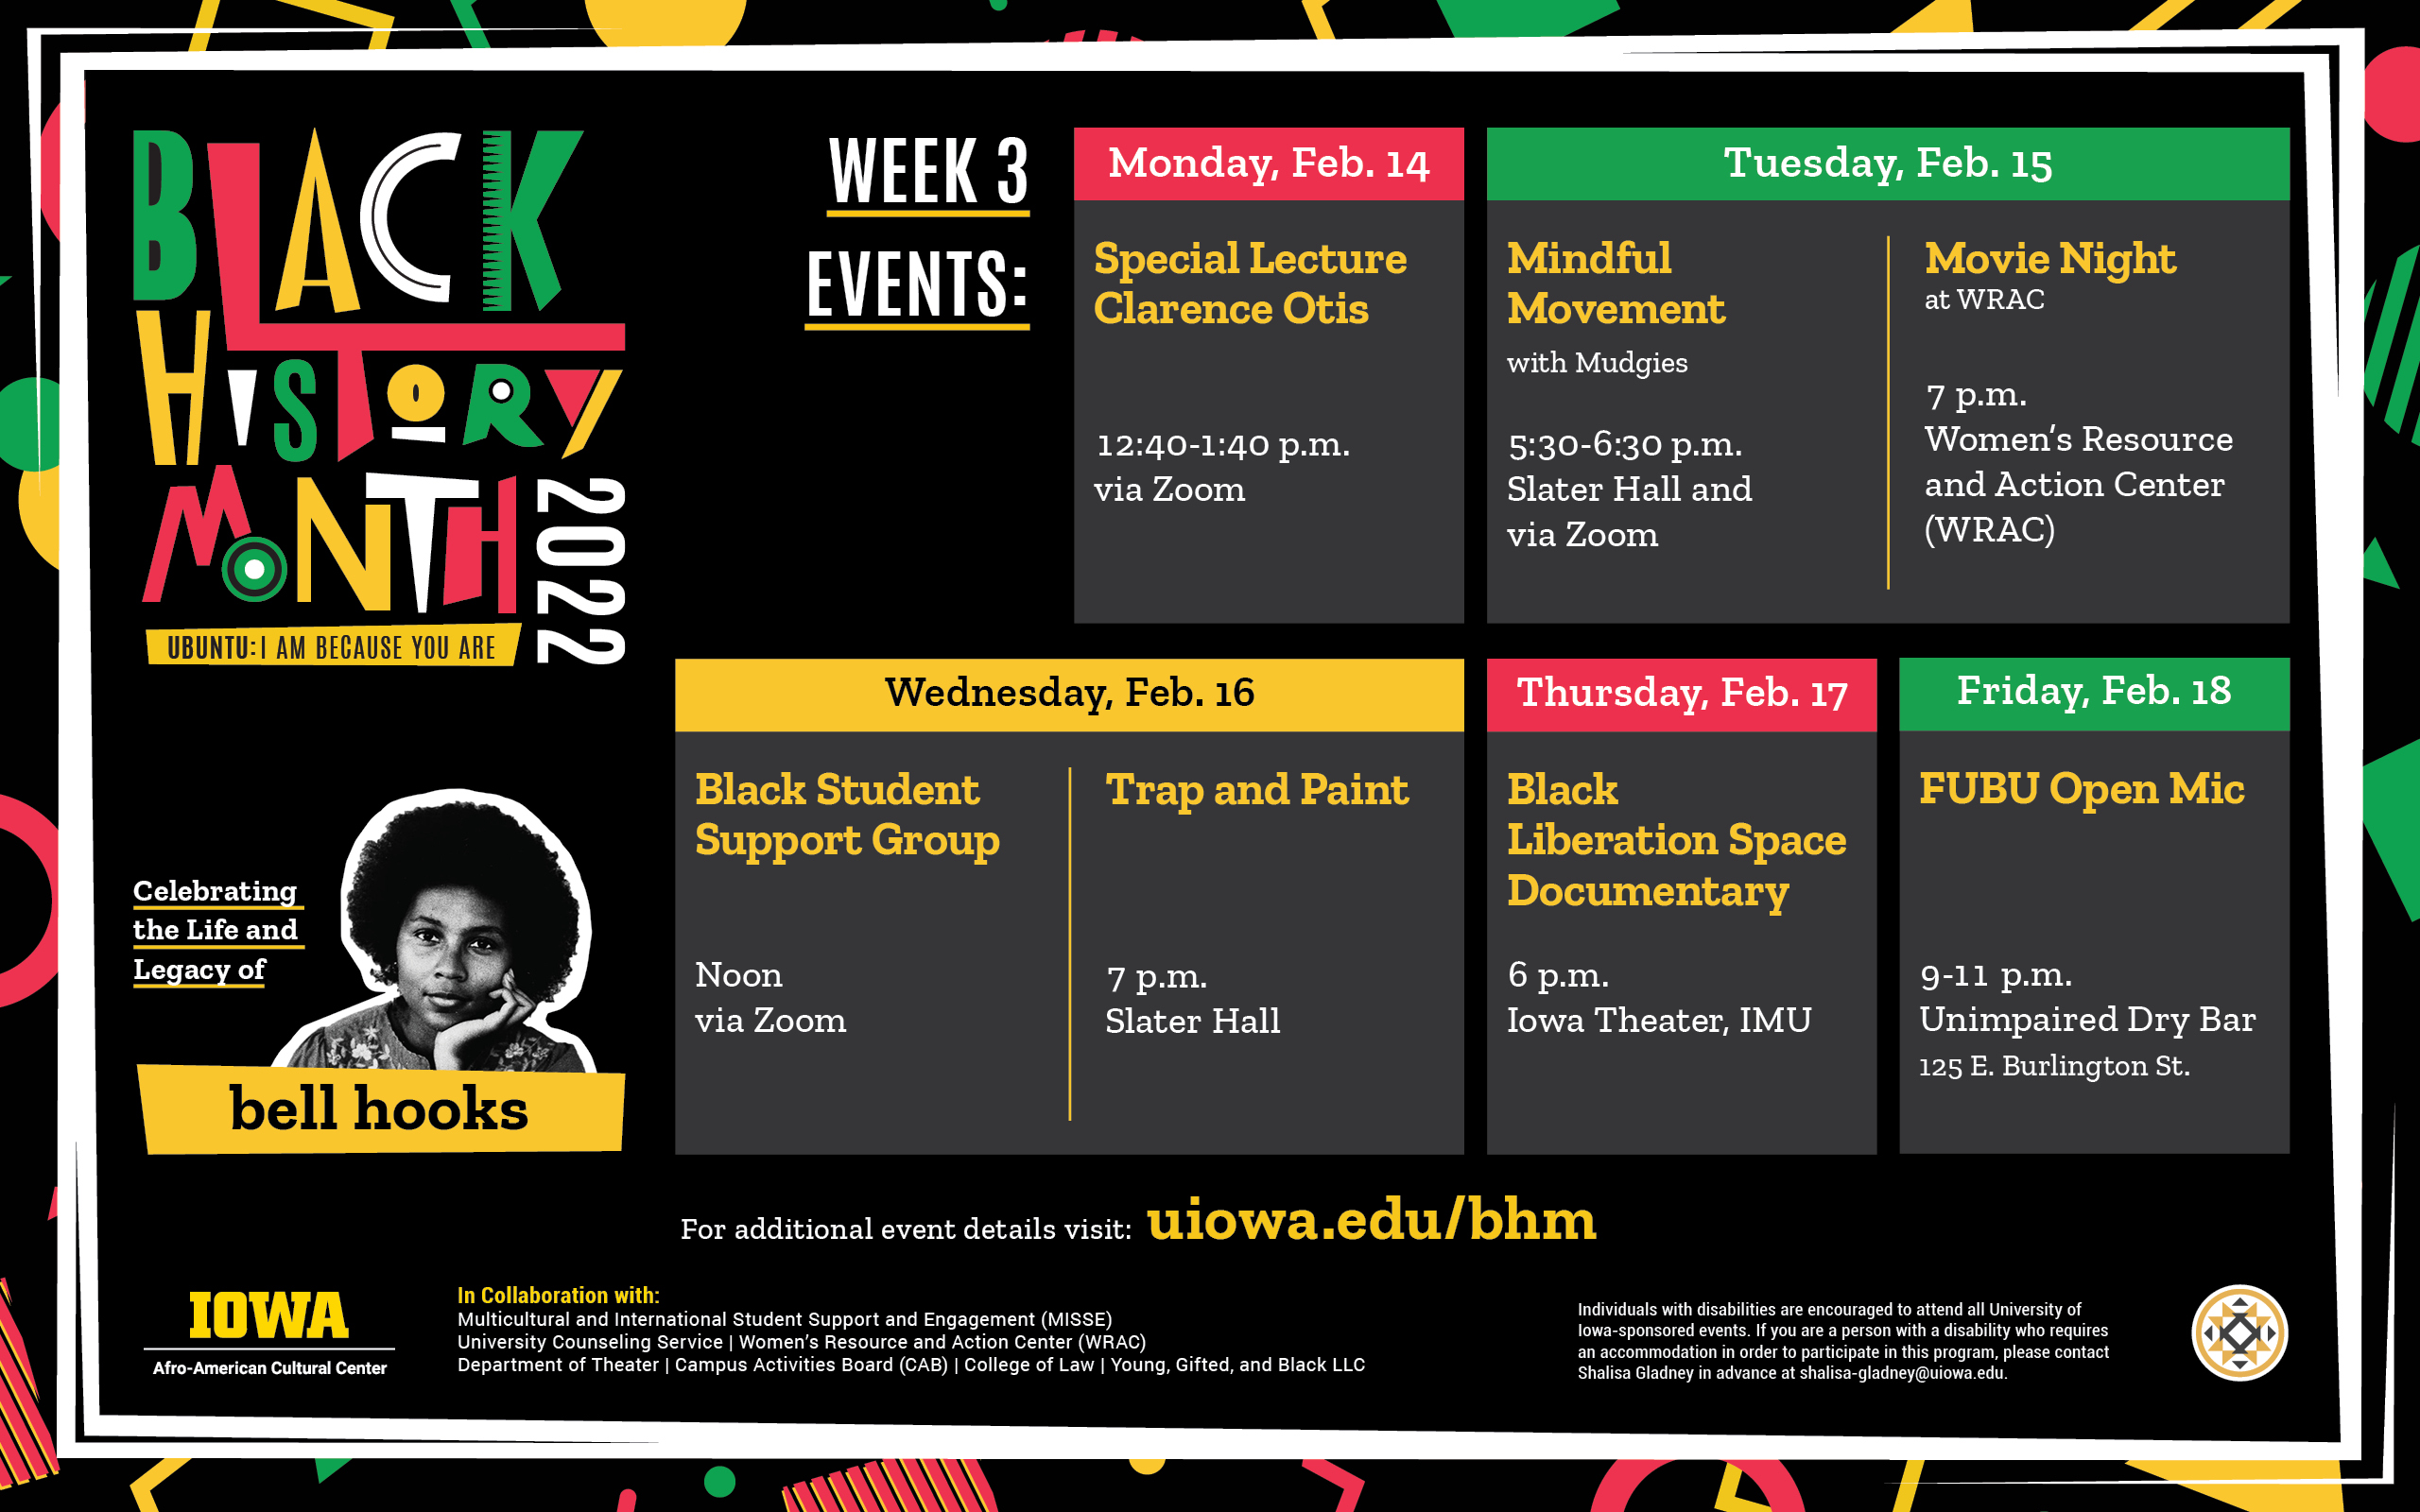 Black History Month Week 3 events view on uiowa.edu/bhm